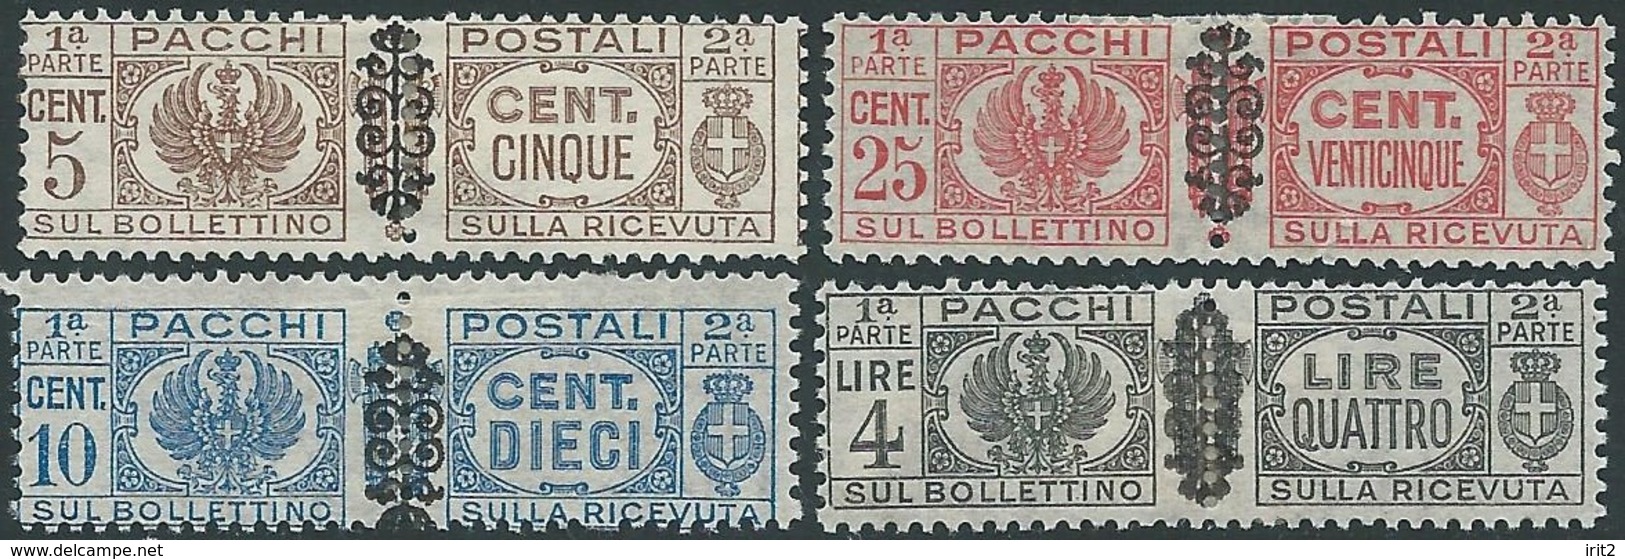 ITALY ITALIA ITALIEN ITALIE  REPUBBLICA 1945 PACCHI POSTALI - Paketmarken